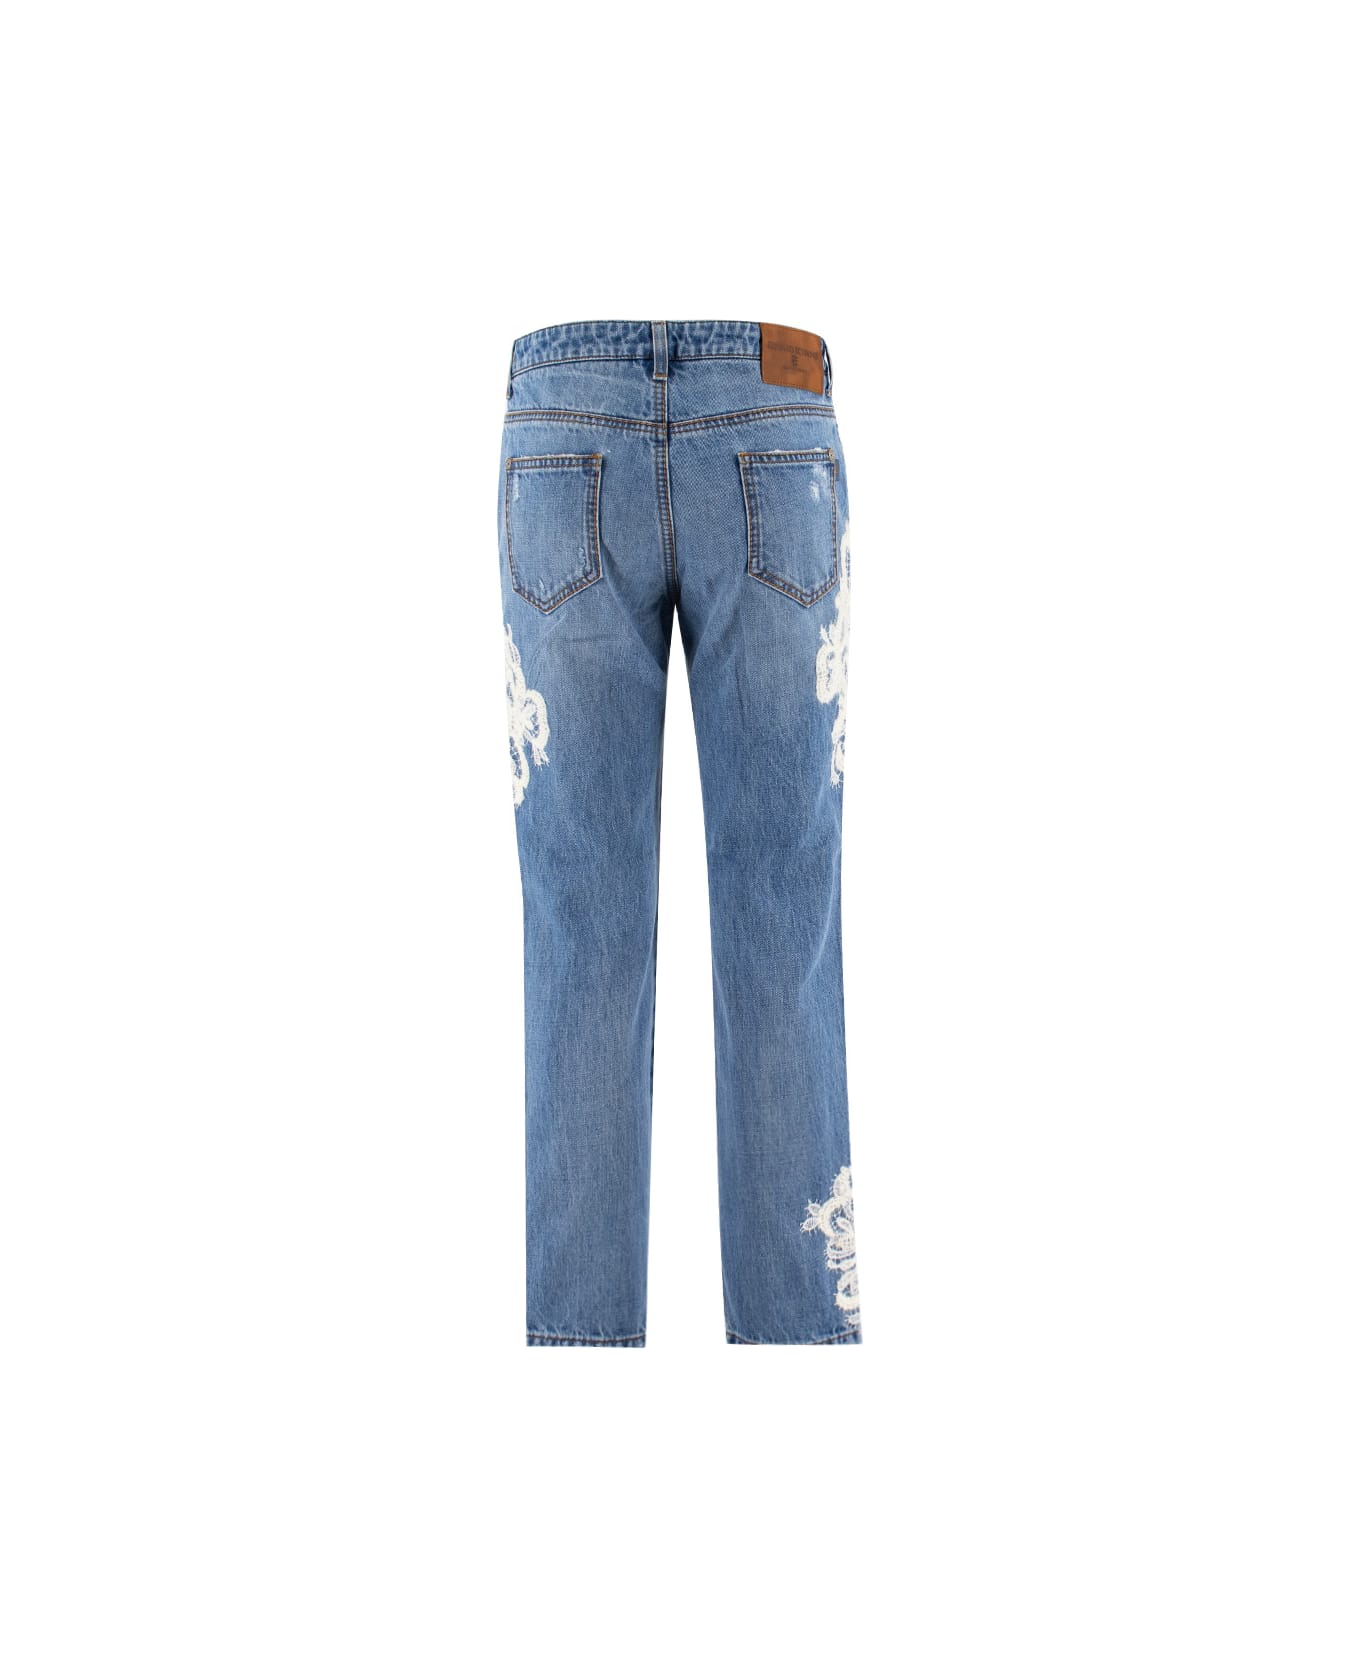 Ermanno Scervino Jeans - BRIGHT COBALT